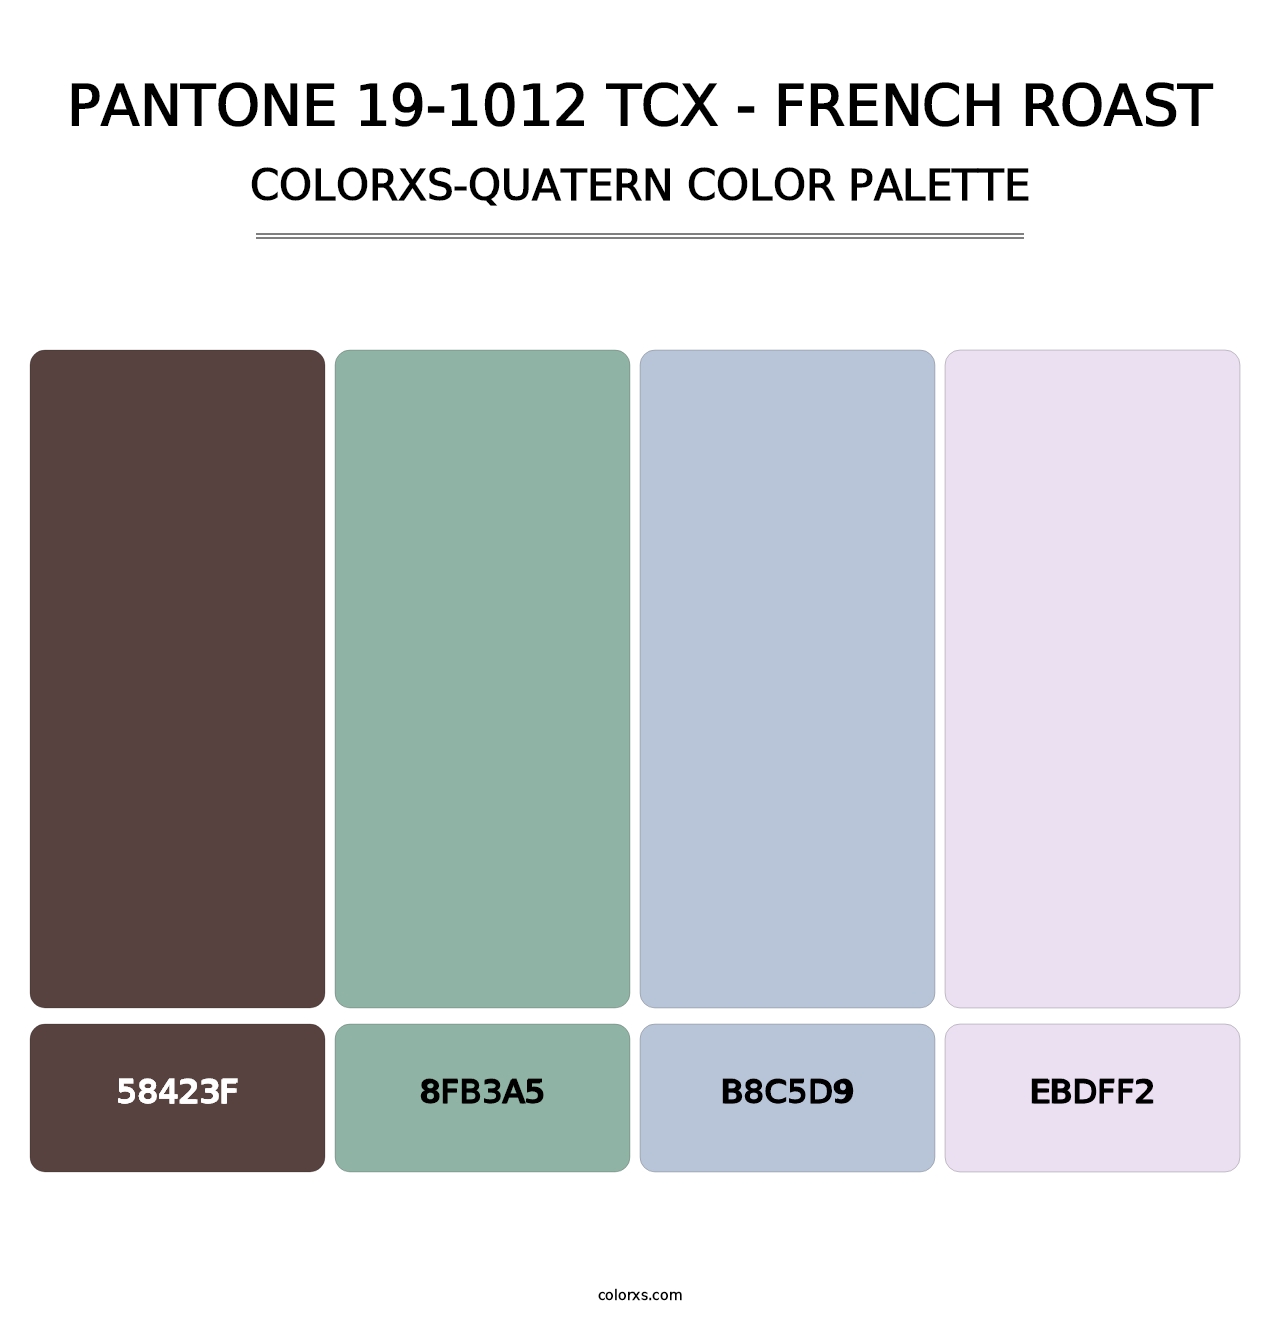 PANTONE 19-1012 TCX - French Roast - Colorxs Quatern Palette